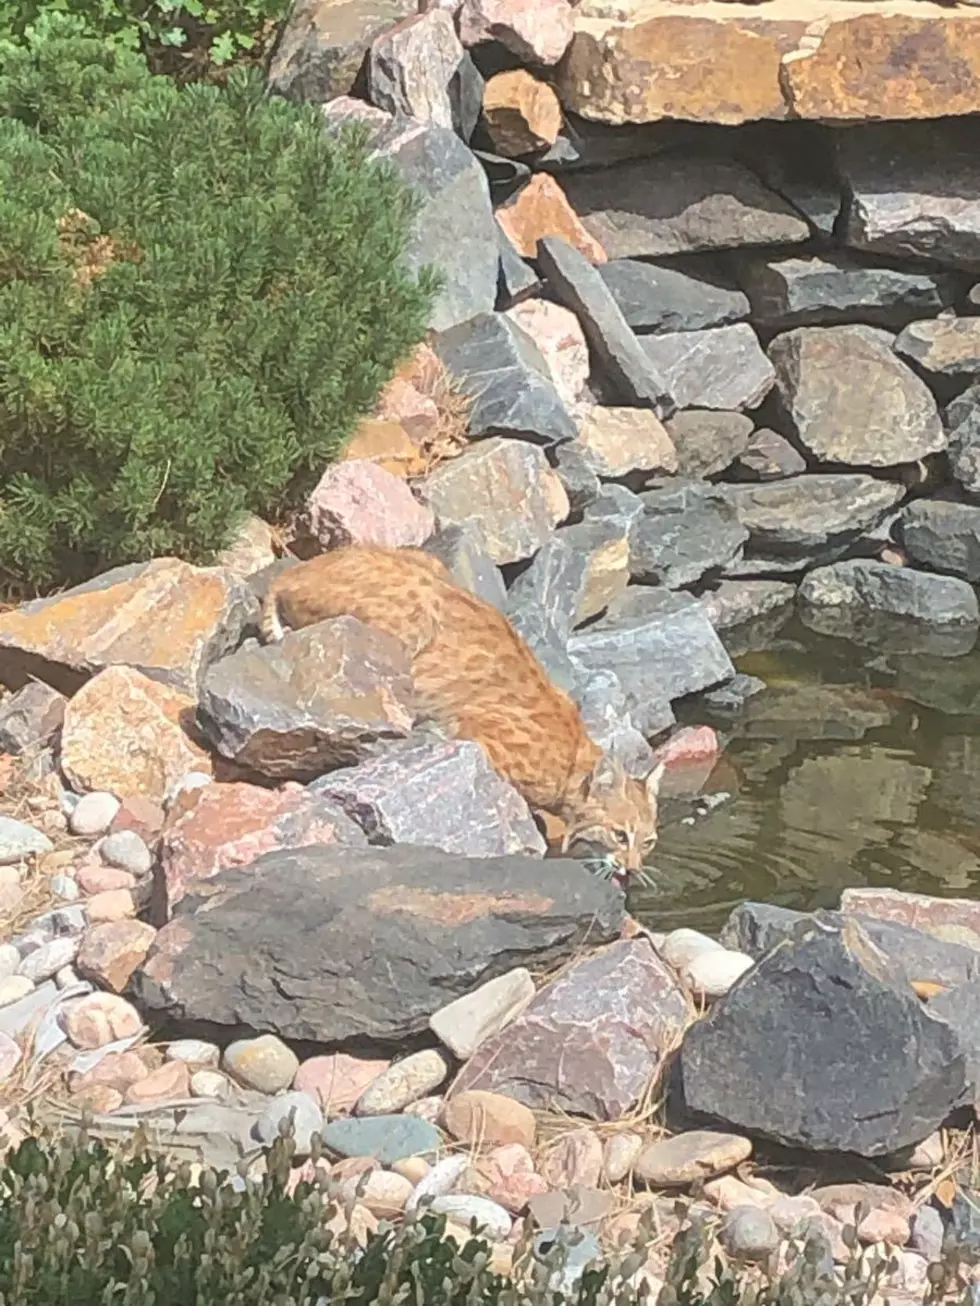 Orange Bobcat Spotted in Southeast Colorado